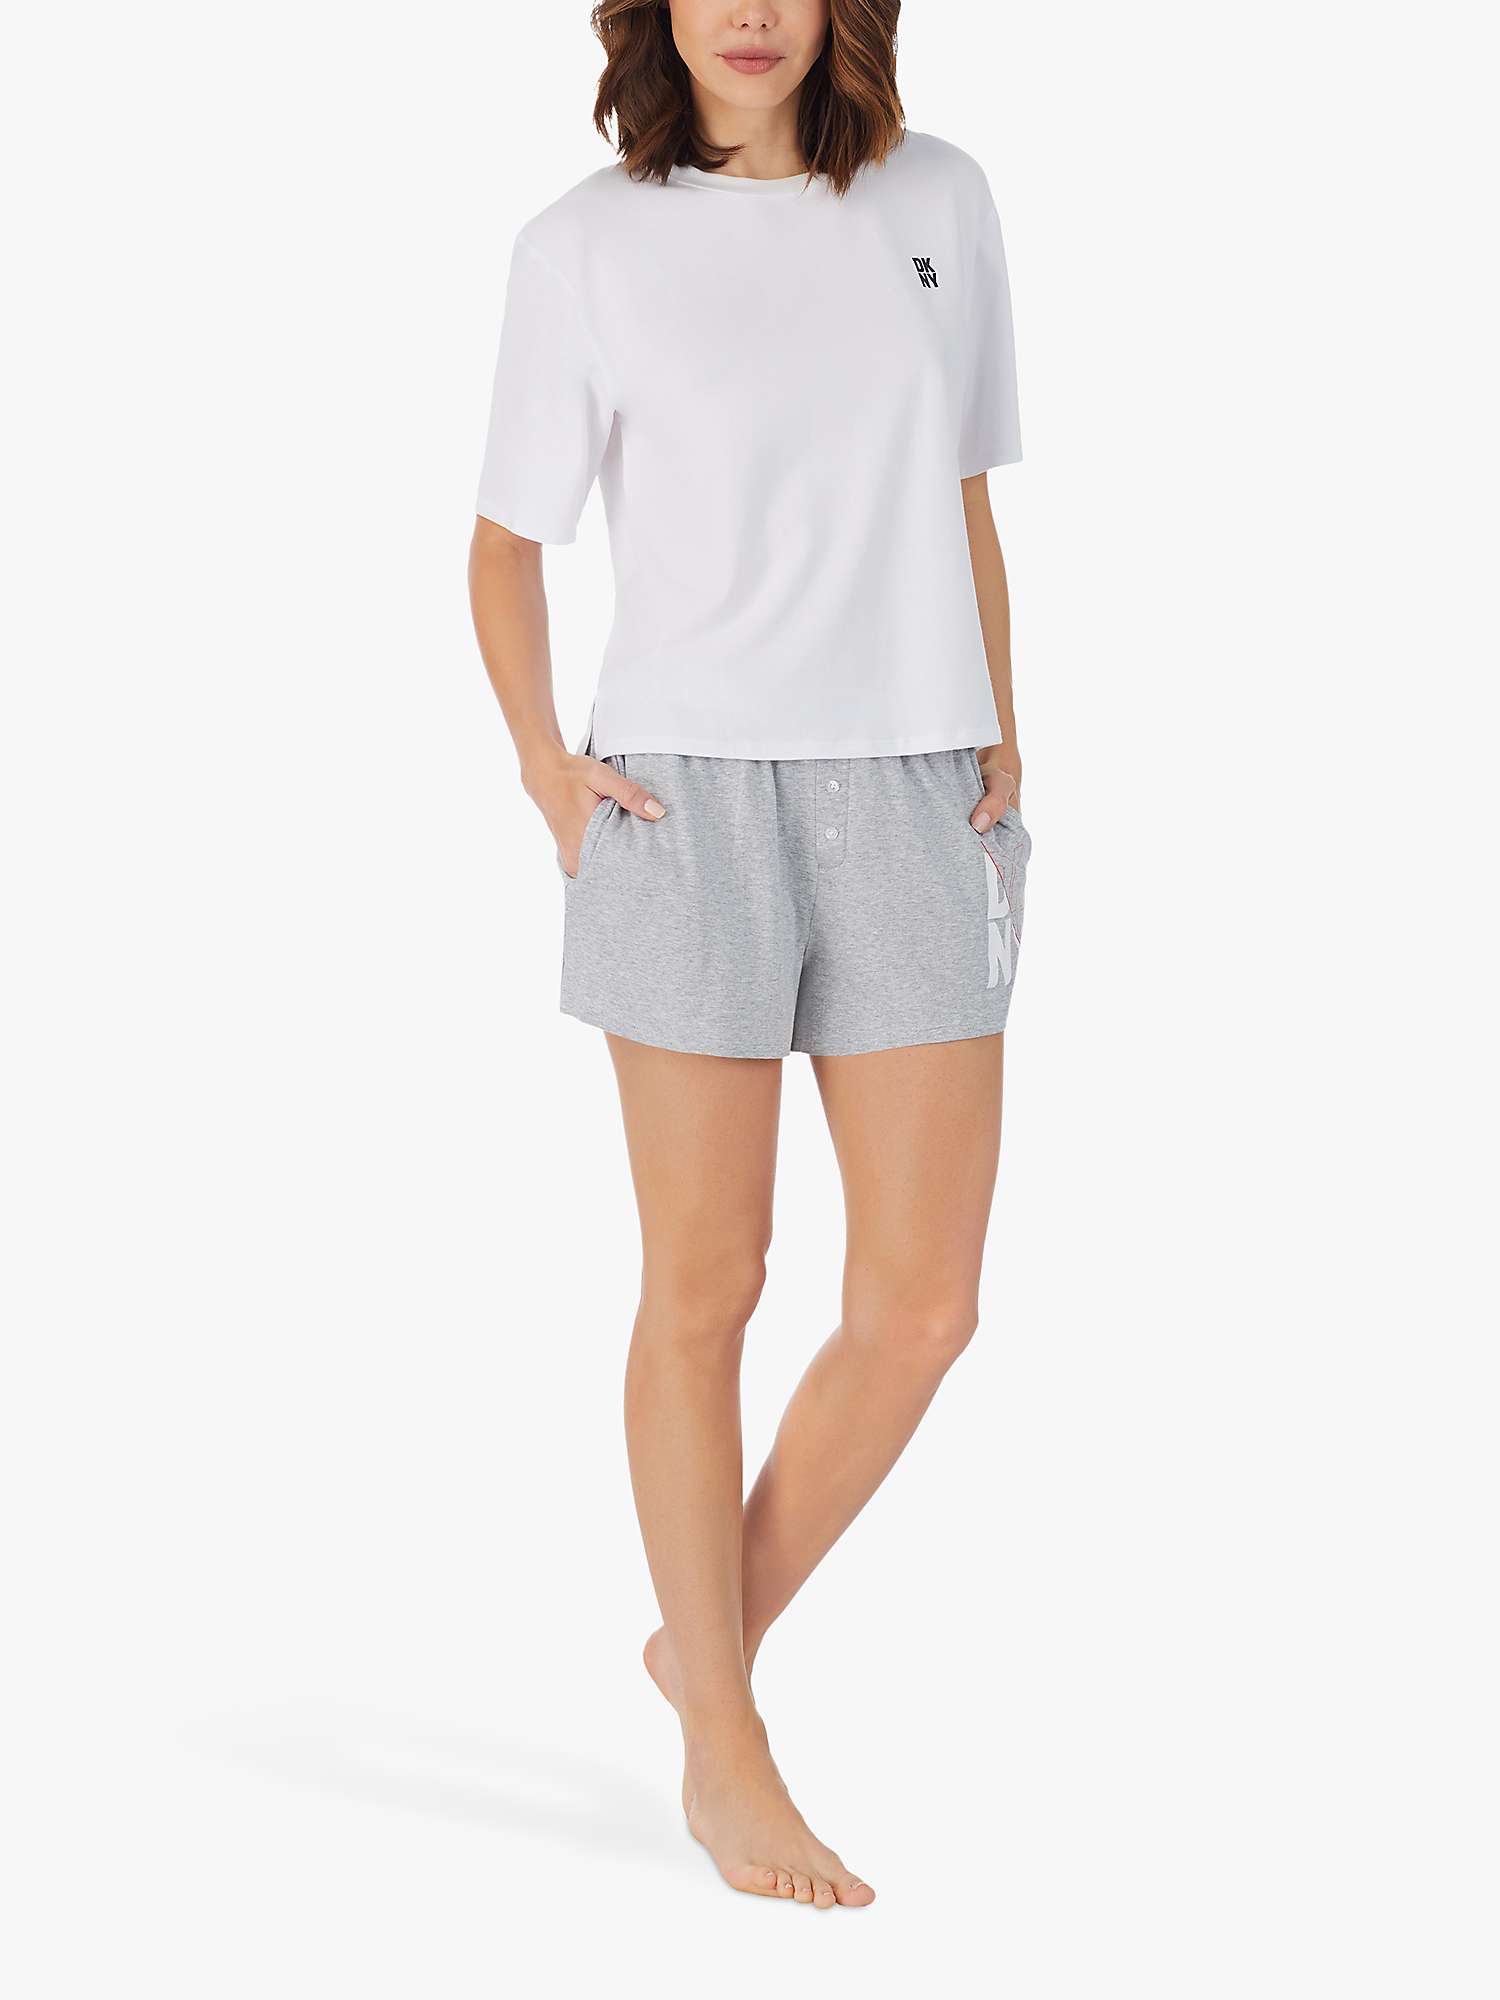 Buy DKNY Cotton Short Sleeve Elasticated Boxer Pyjama Set Online at johnlewis.com